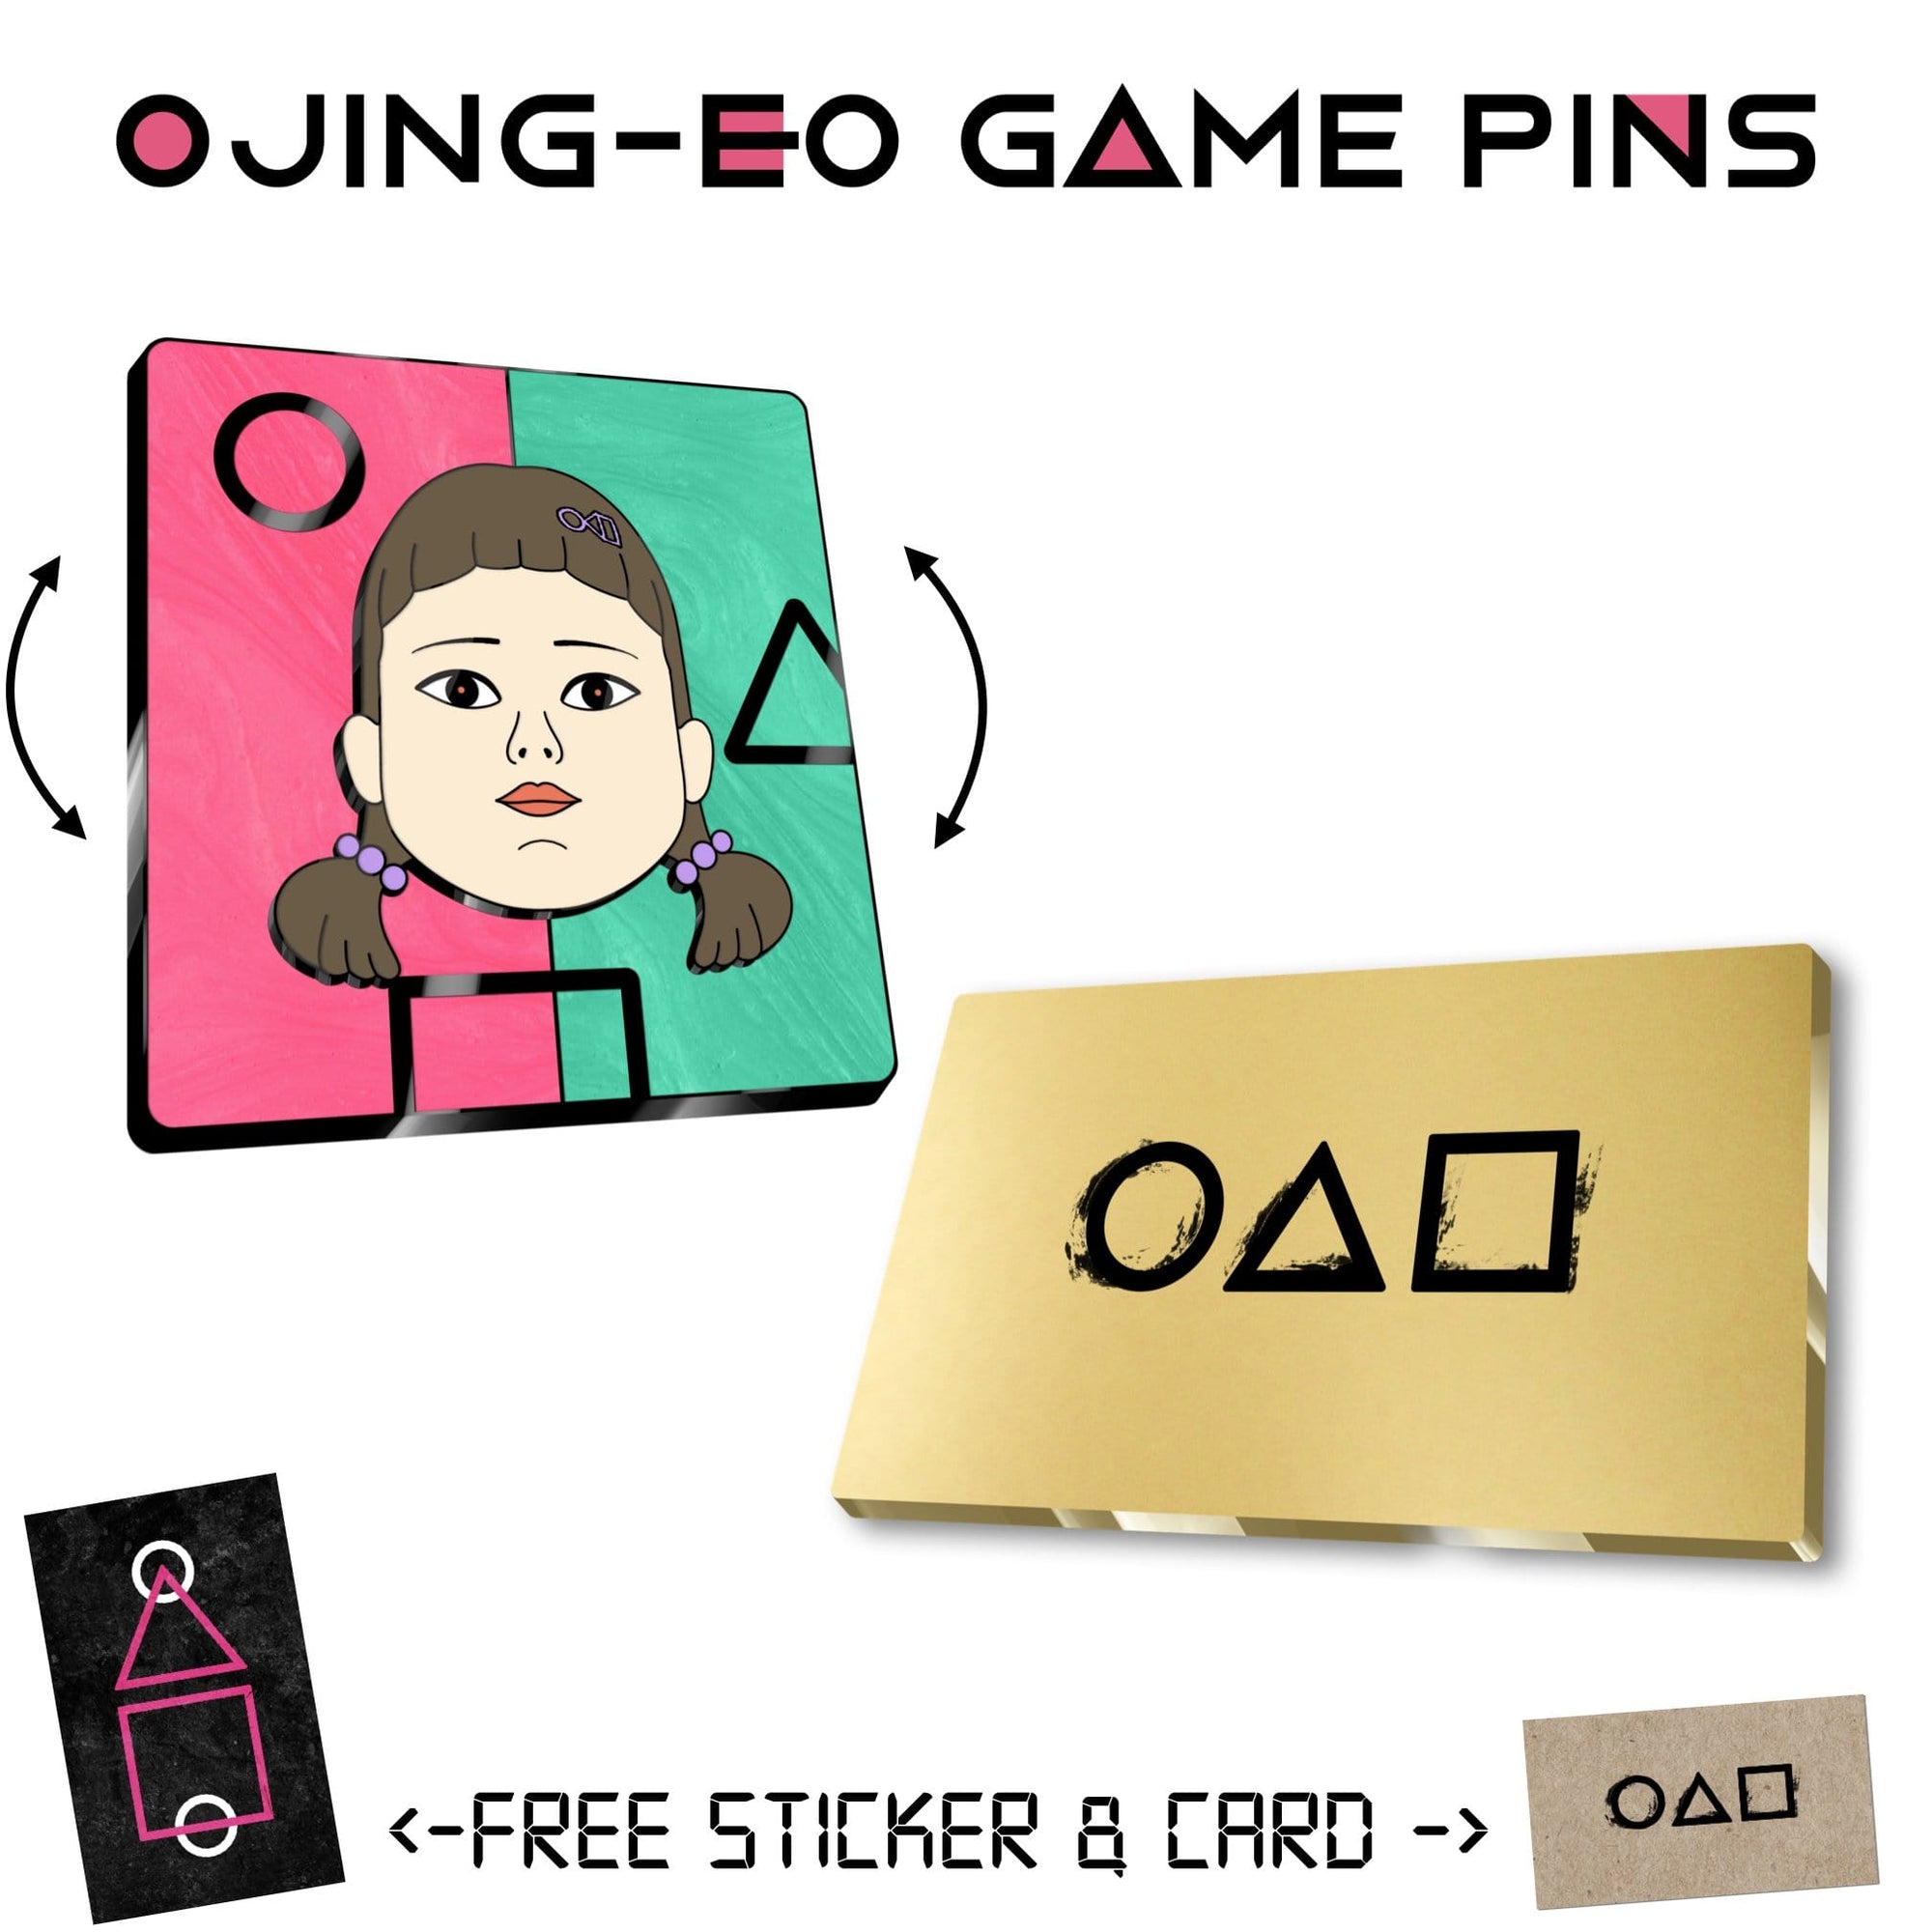 pinbuds 2 Pin Set: Game invite & Light Spinner Pin Squid Invite Pin